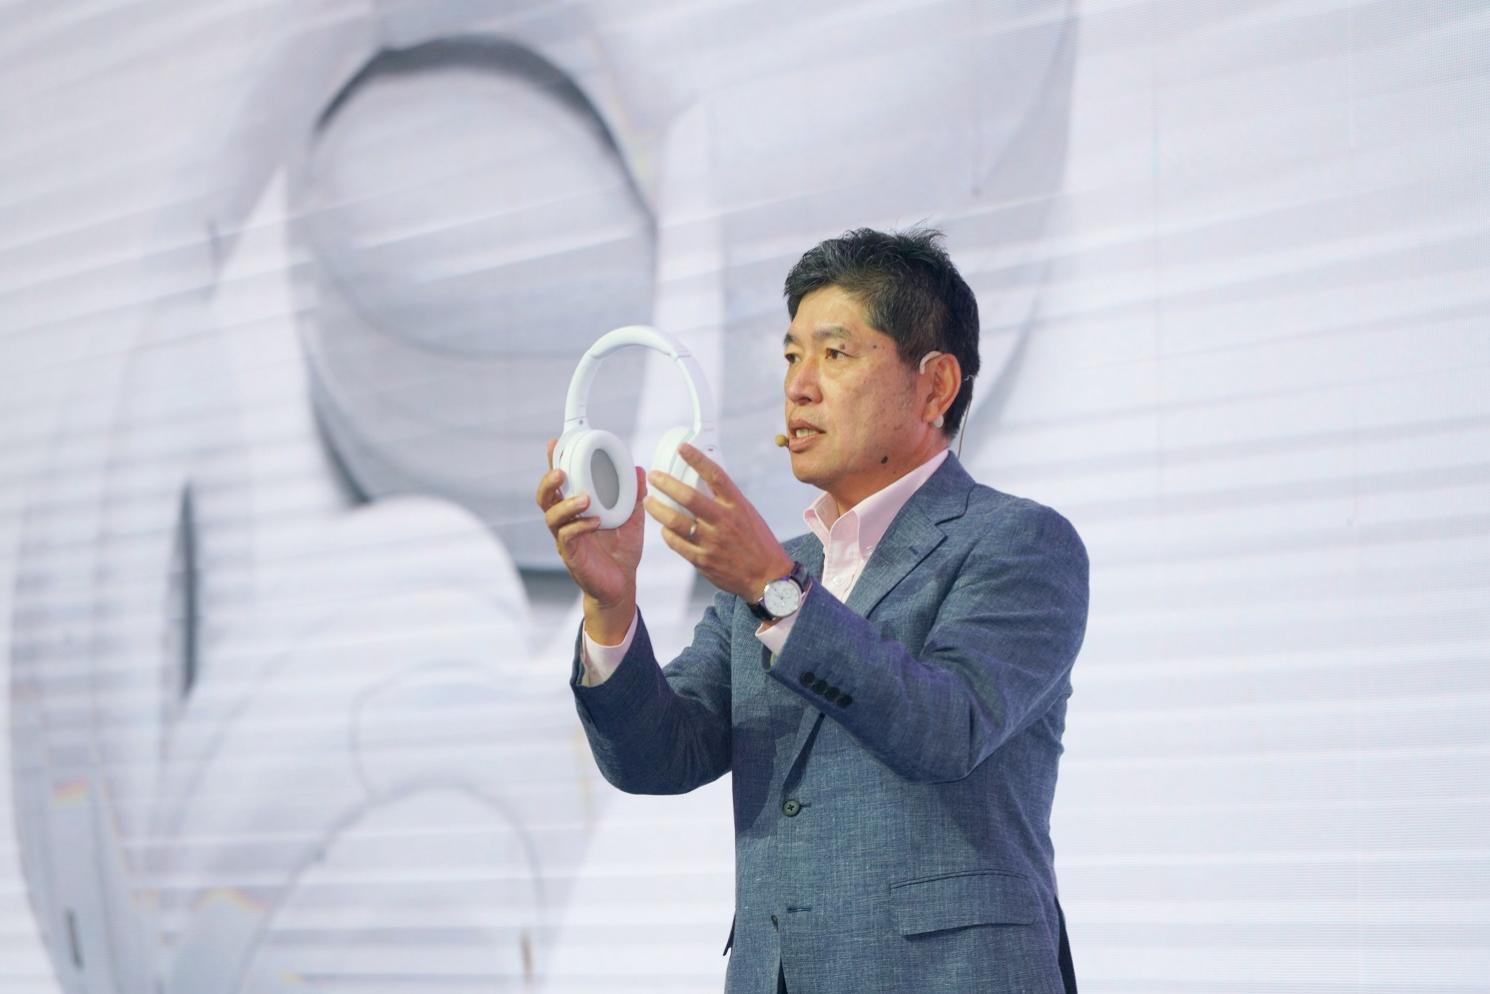 “Sony Expo 2021”披露后疫情时代企业战略-视听圈